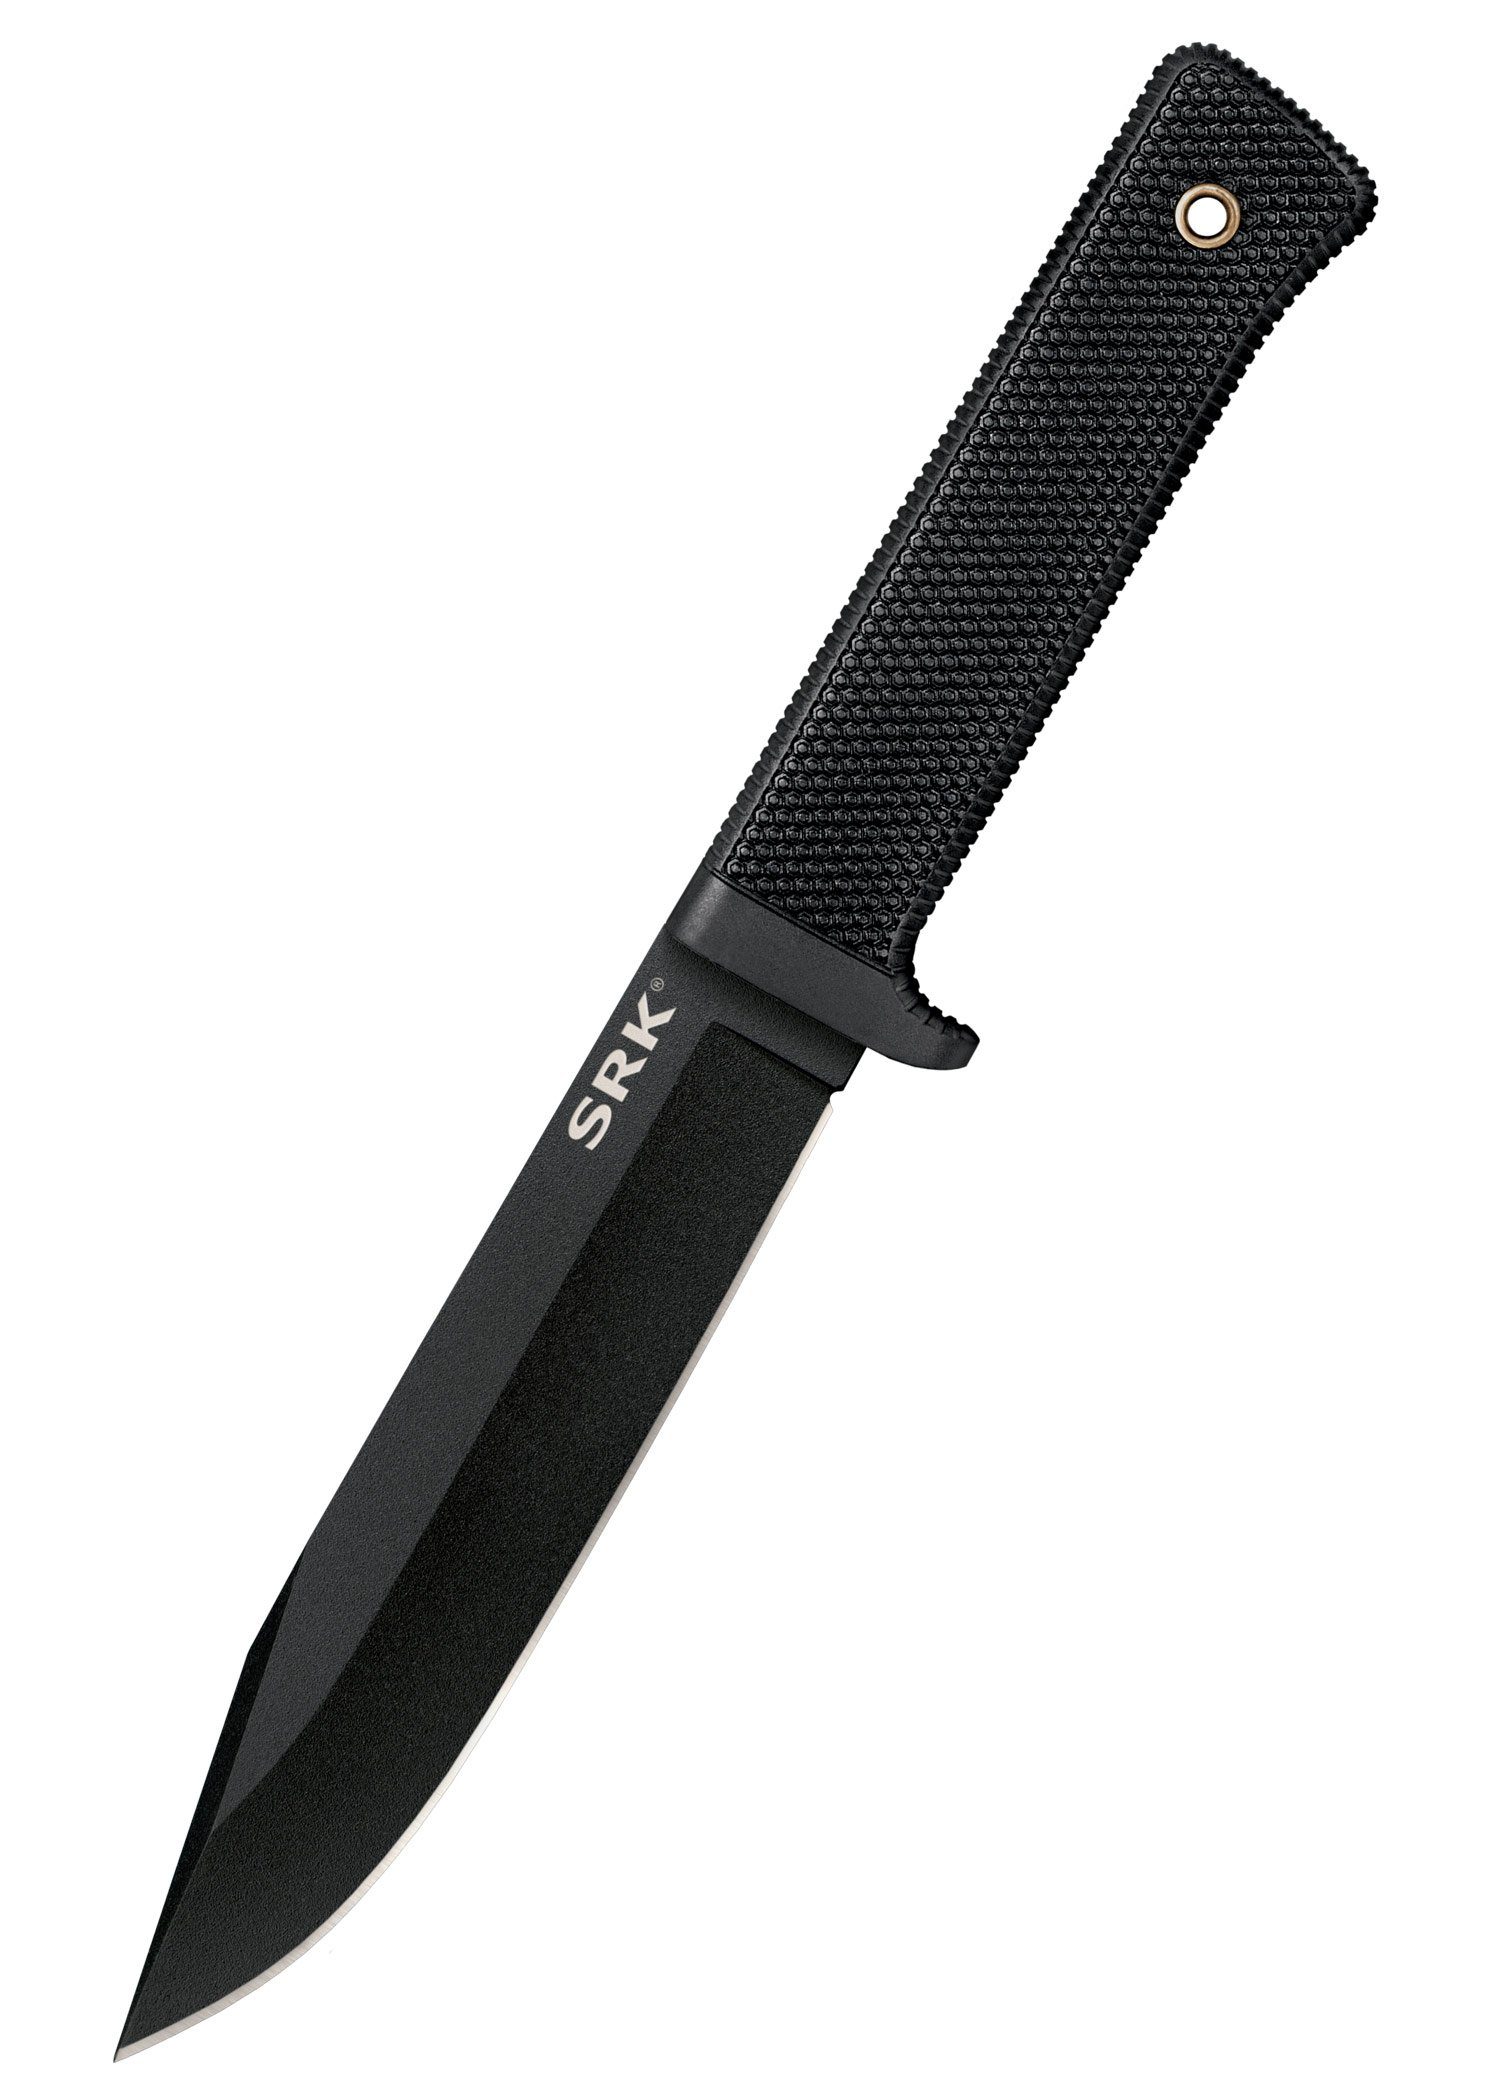 Cold Steel Survival Knife Cold (1 Secure-Ex Steel SK-5 Karbonstahl St) aus mit schwarz SRK Scheide